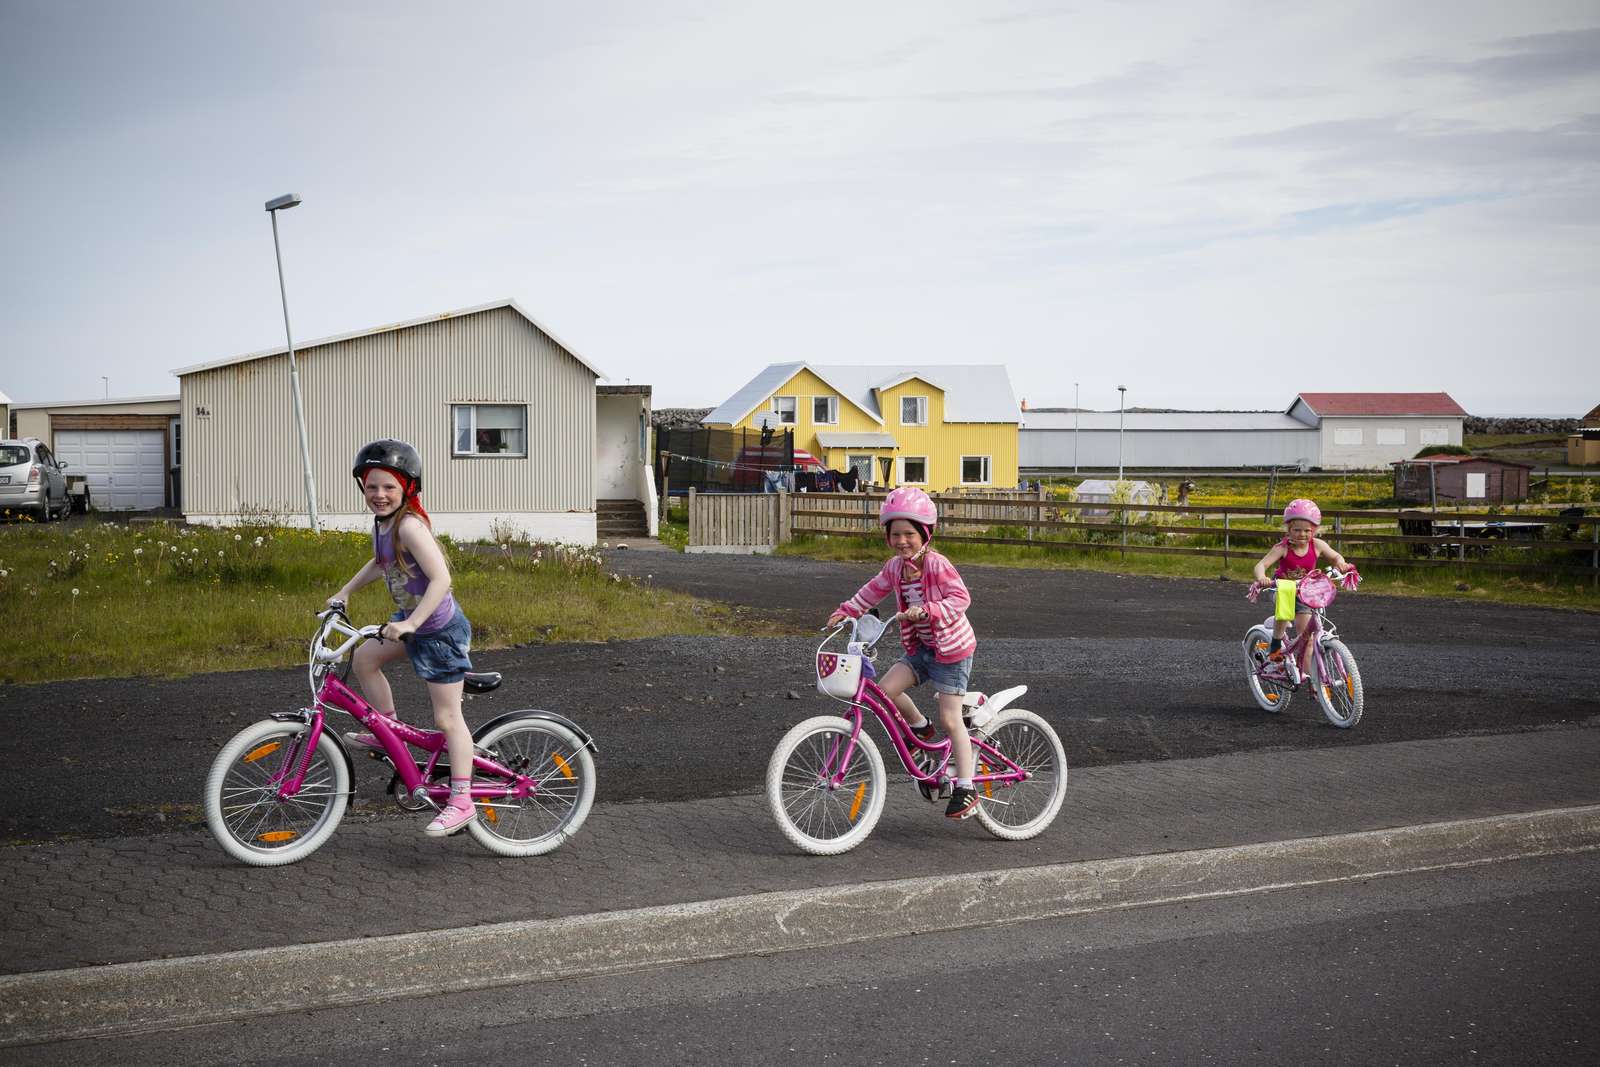 Kids on bikes, Iceland